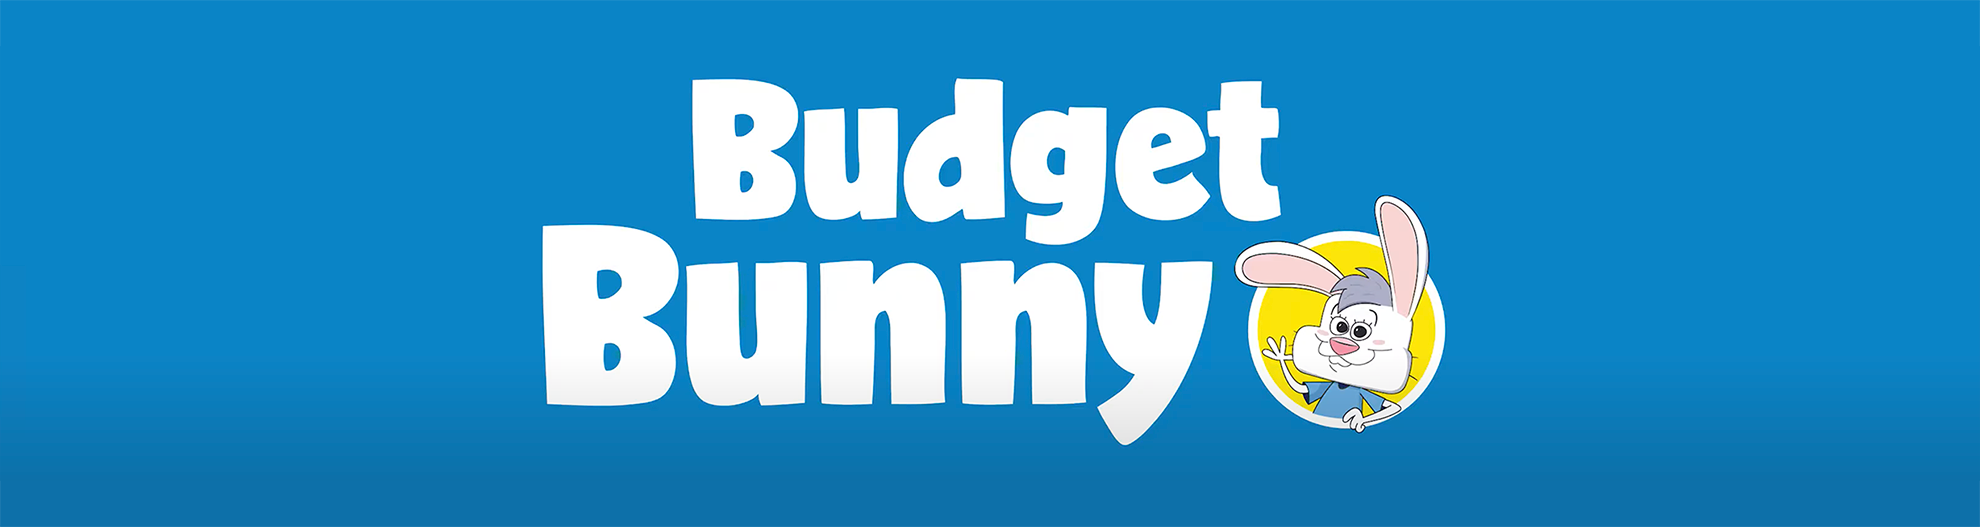 Budget Bunny Header